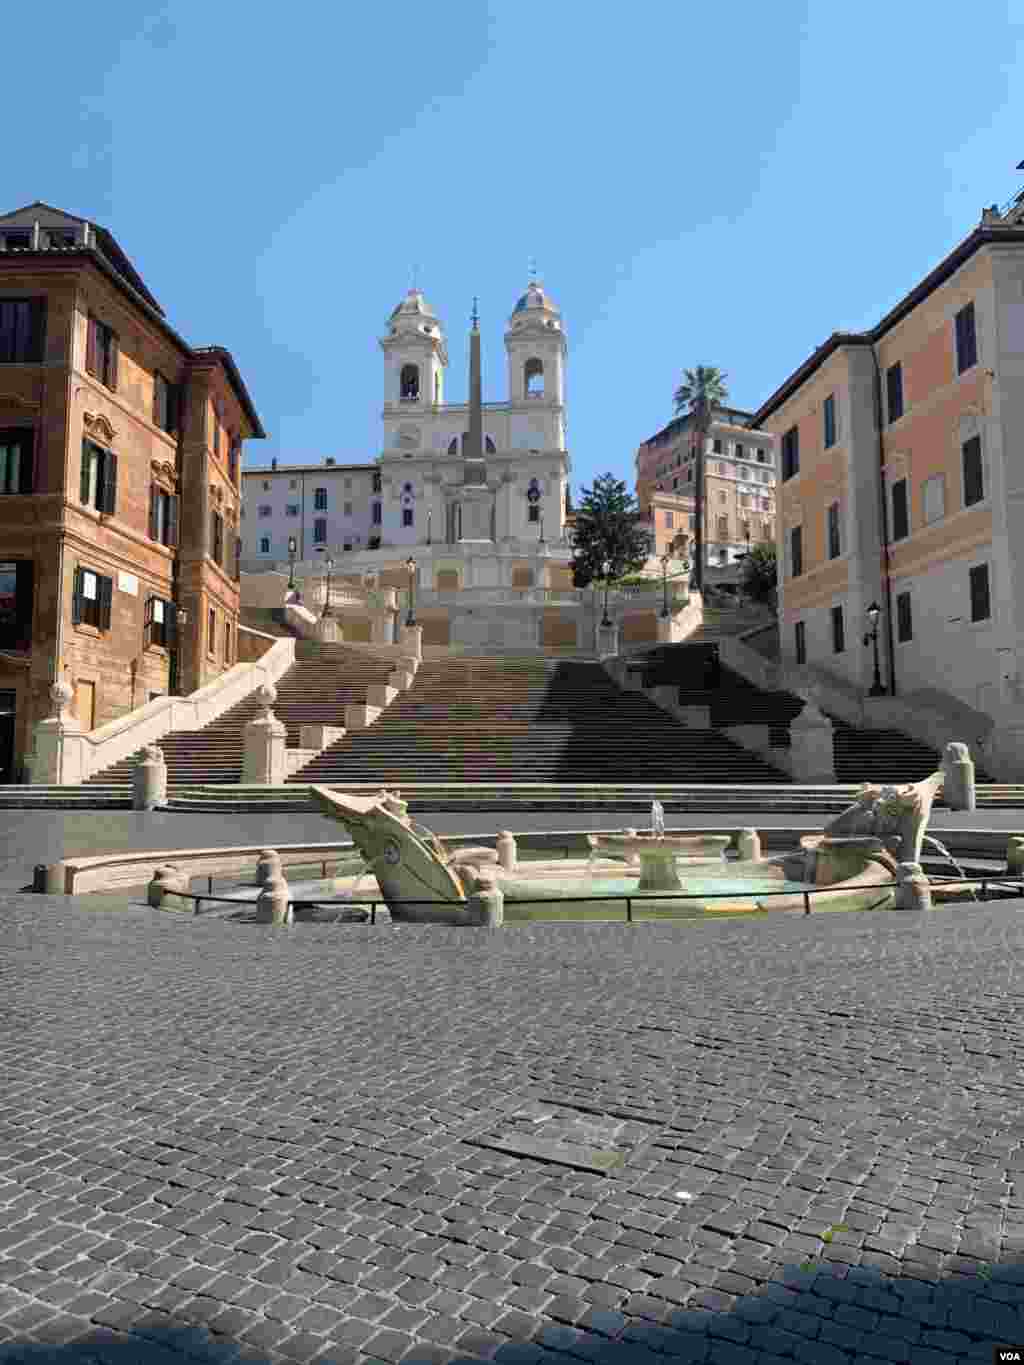 The popular Spanish Steps and the Bernini fountain are deserted. (Photo: Sabina Castelfranco / VOA)